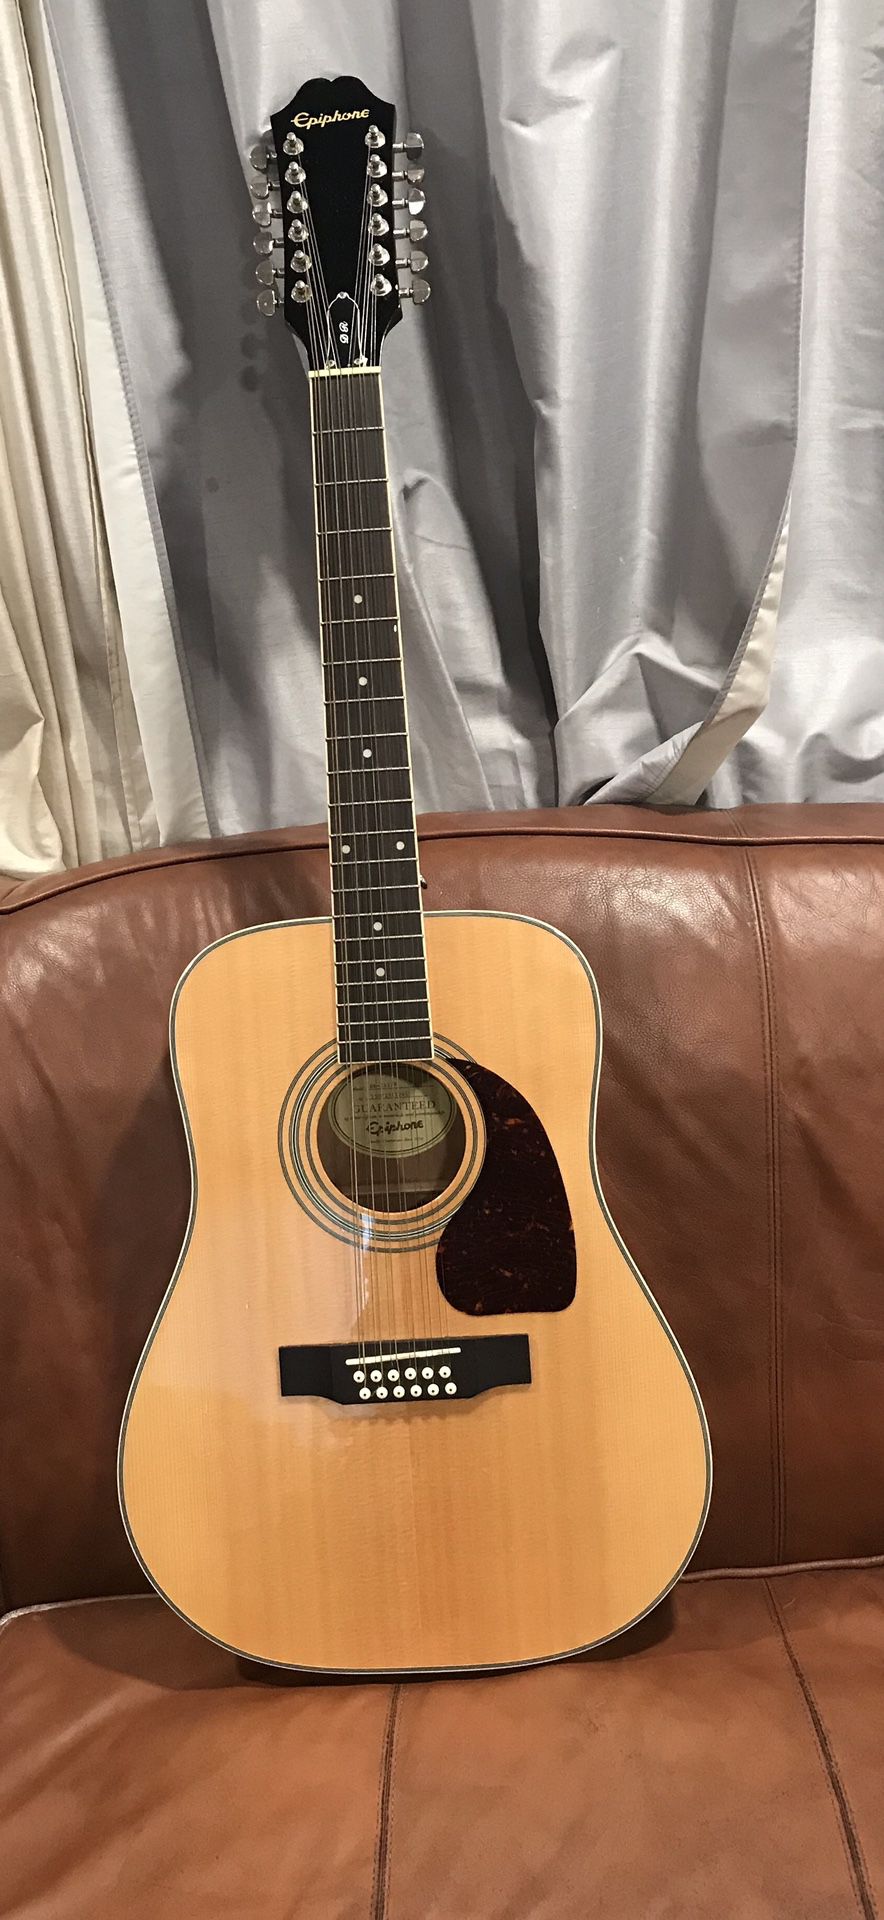 12 String Acoustic Guitar $120.00